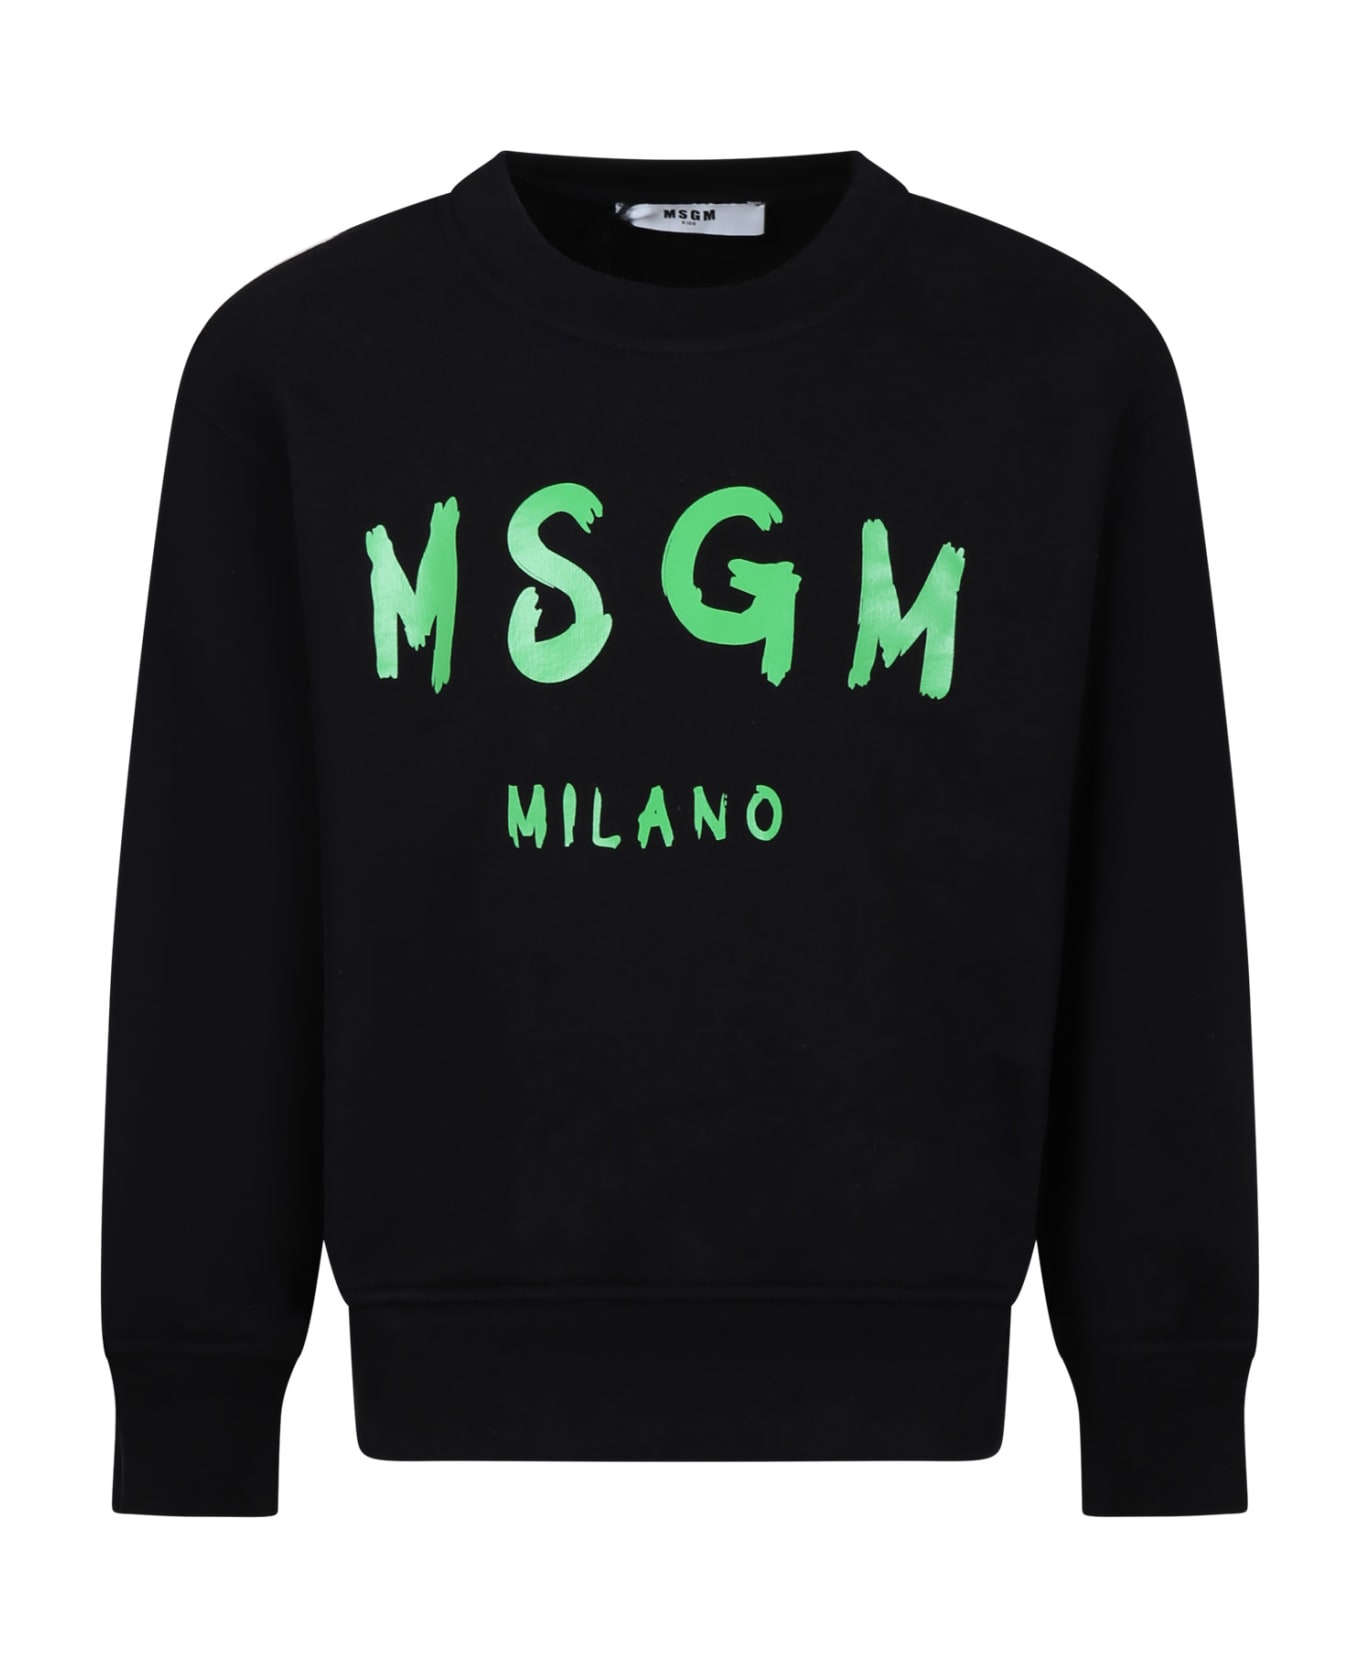 MSGM Black Sweatshirt For Kids With Green Logo - Nero